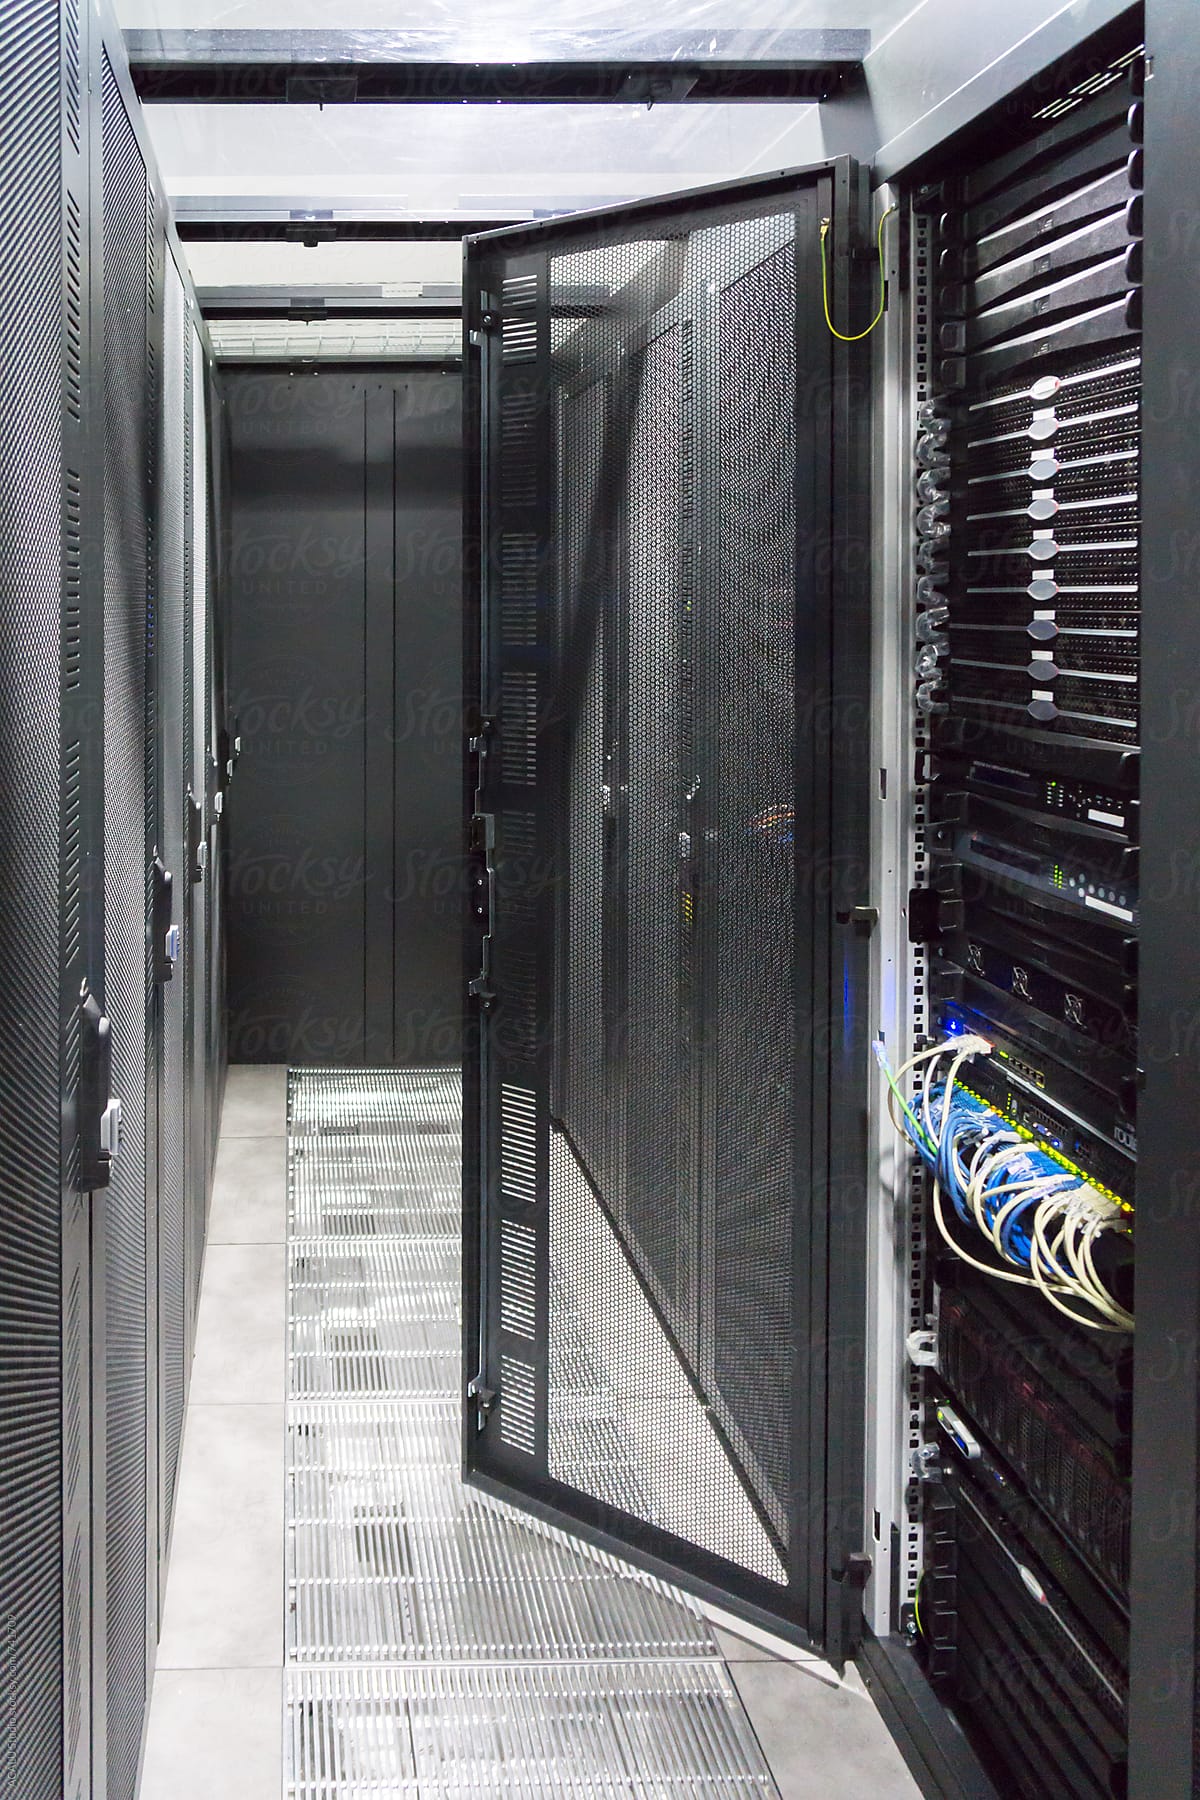 Datacenter servers